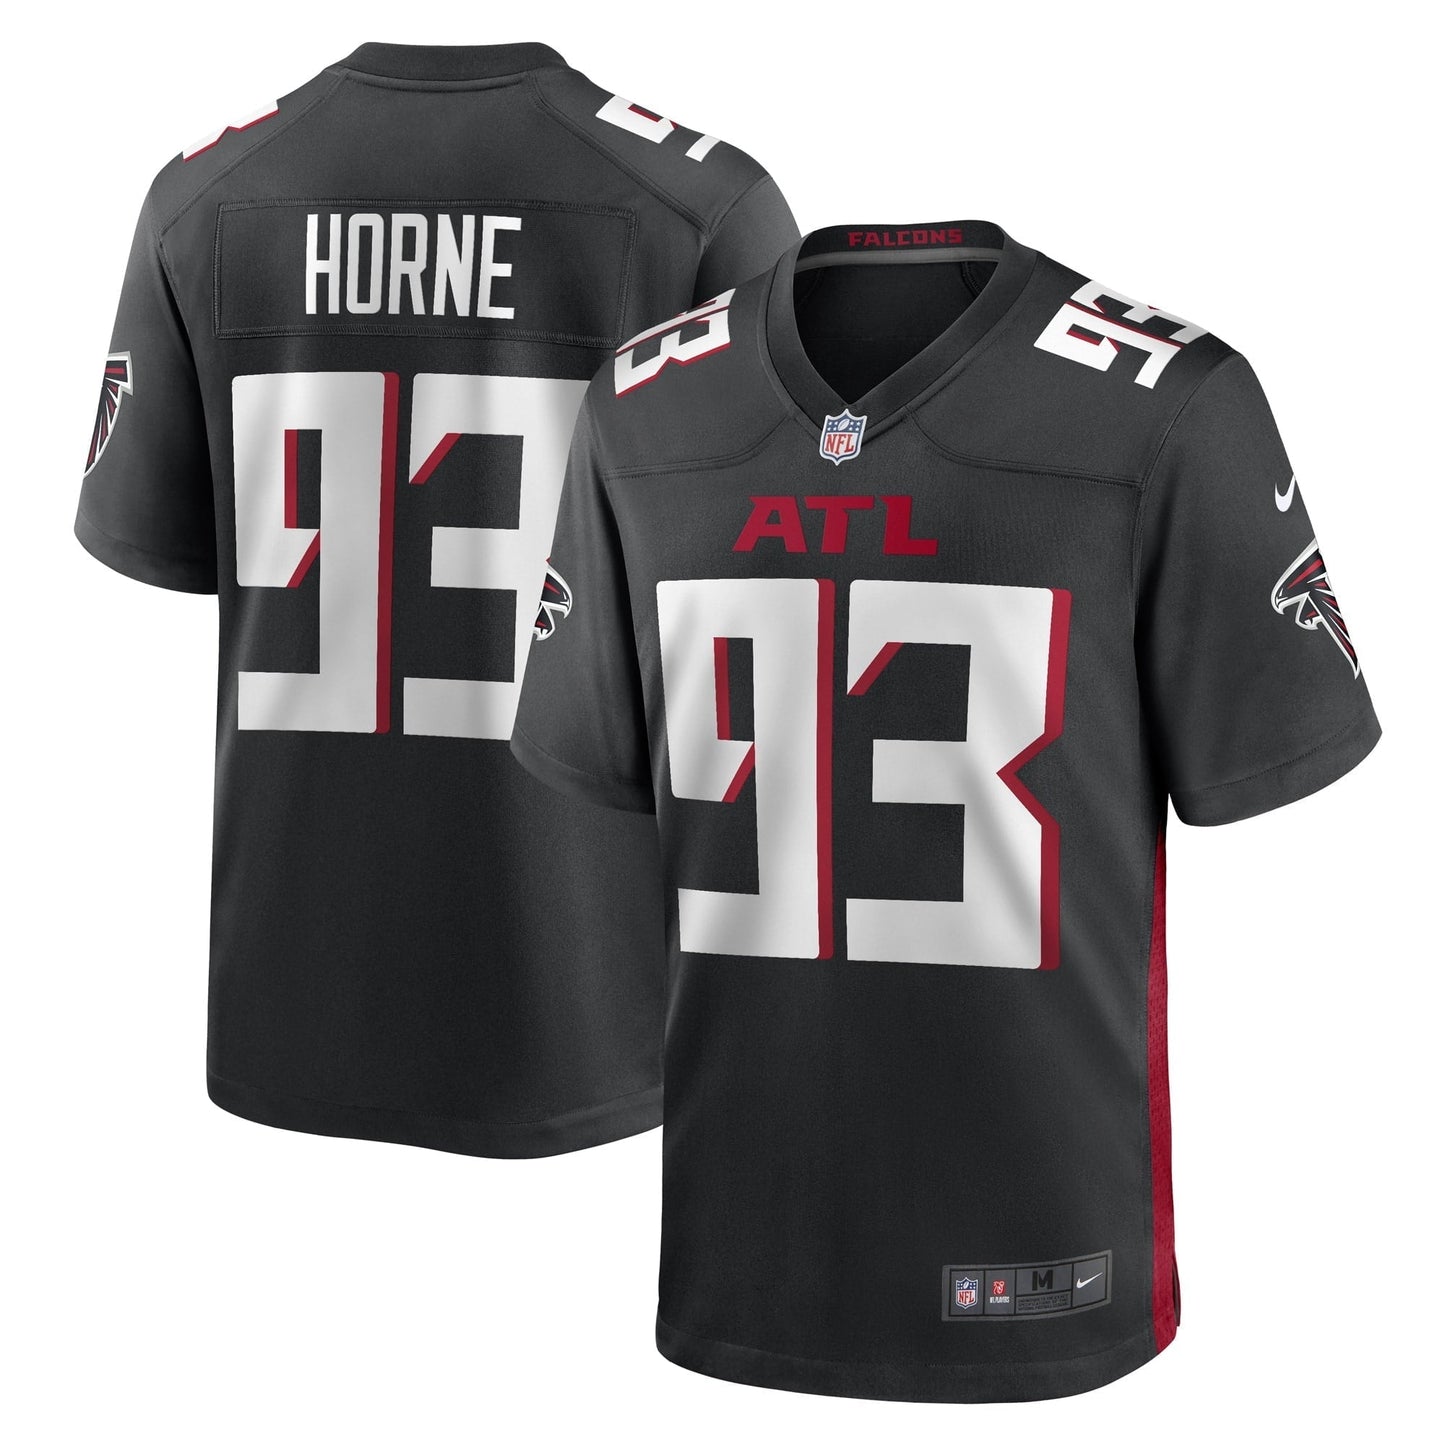 Men's Nike Black Atlanta Falcons Timmy Horne Game Player Jersey